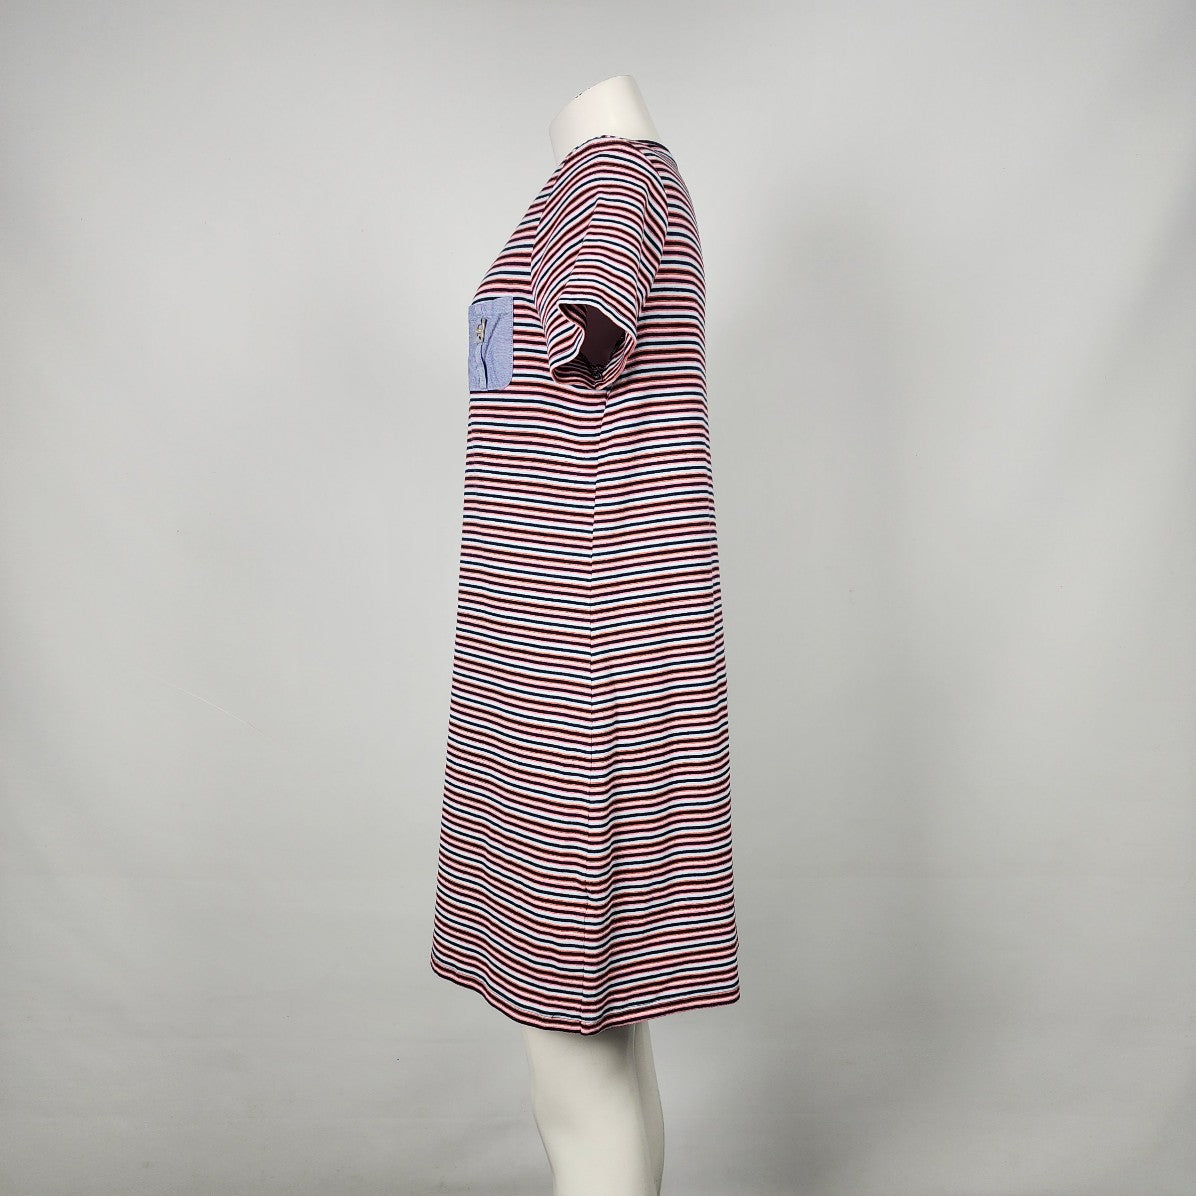 Tommy Hilfiger Red & Black Striped Shirt Dress Size XL